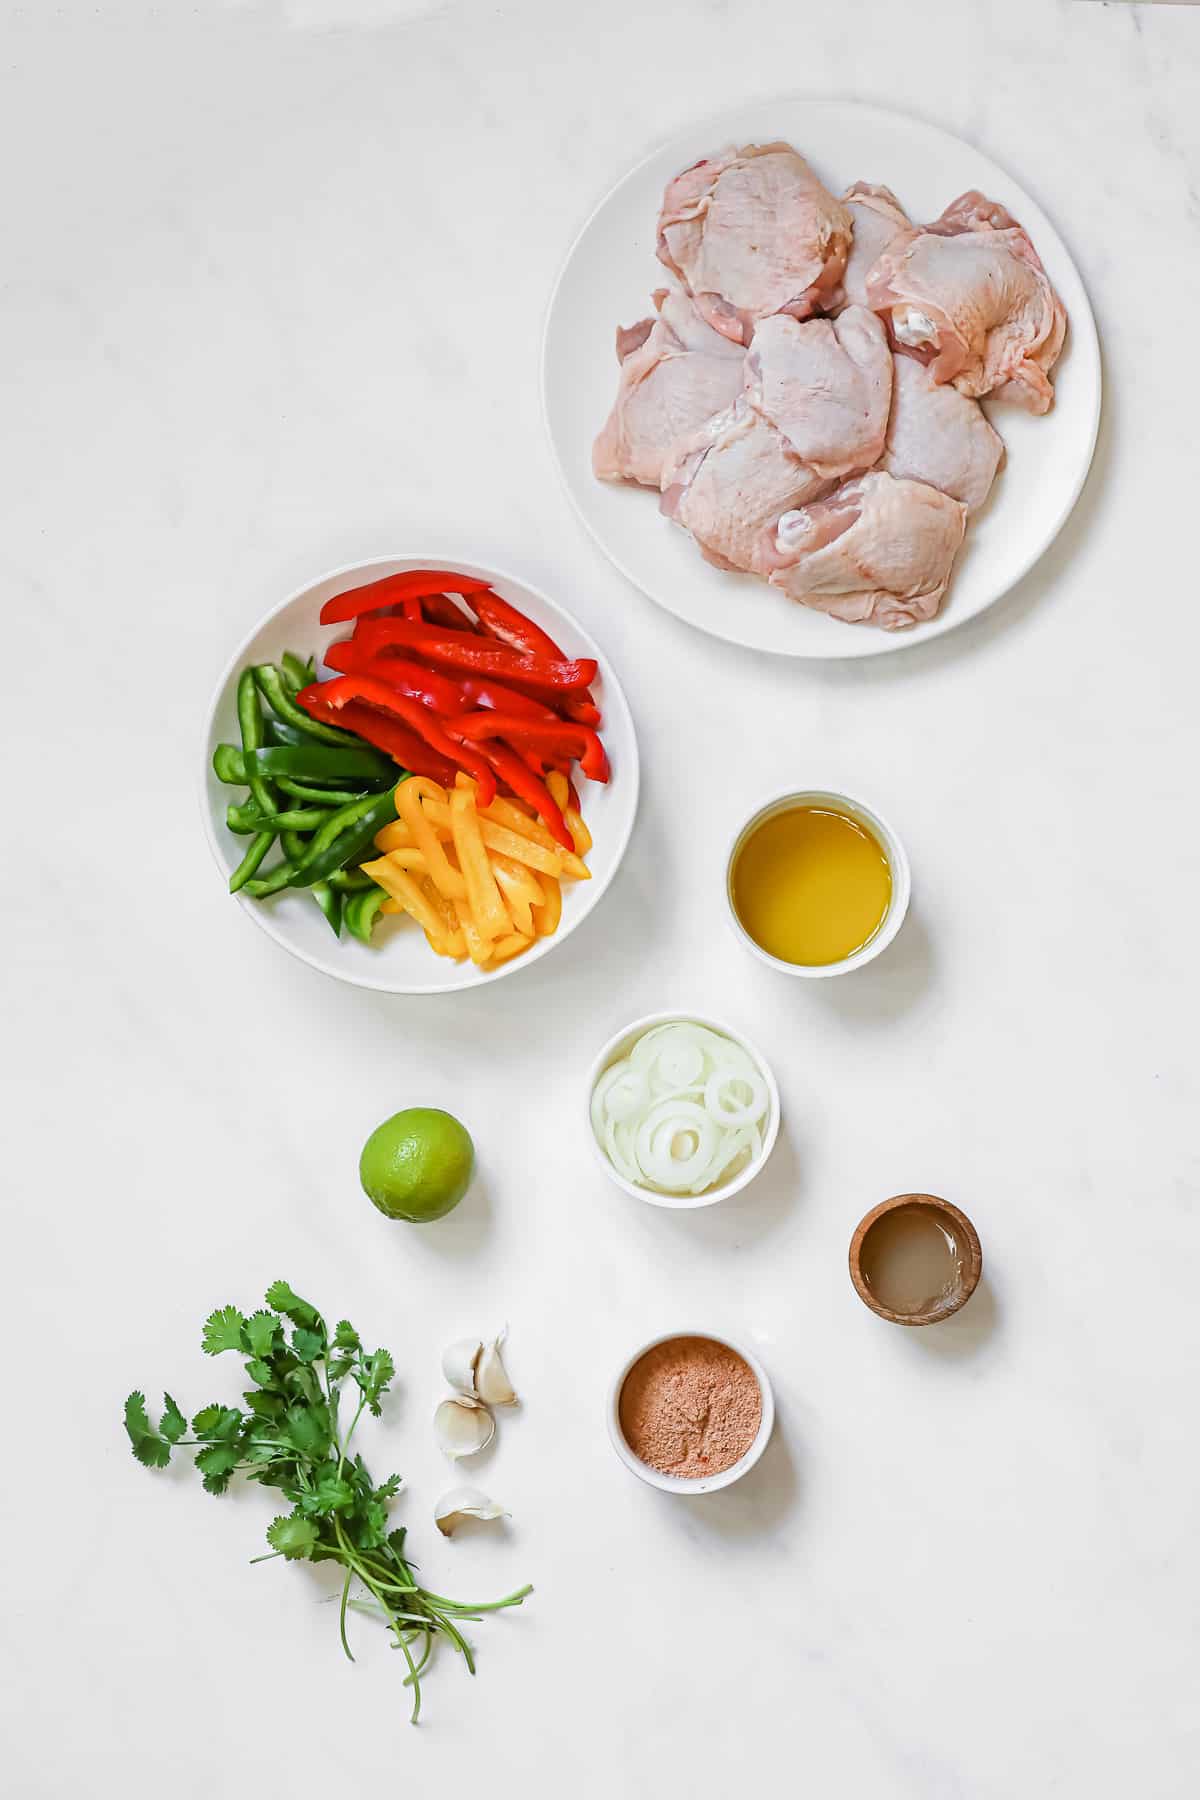 Ingredients laid out to make keto chicken fajitas - chicken, peppers, onions, seasoning, garlic, limes, cilantro